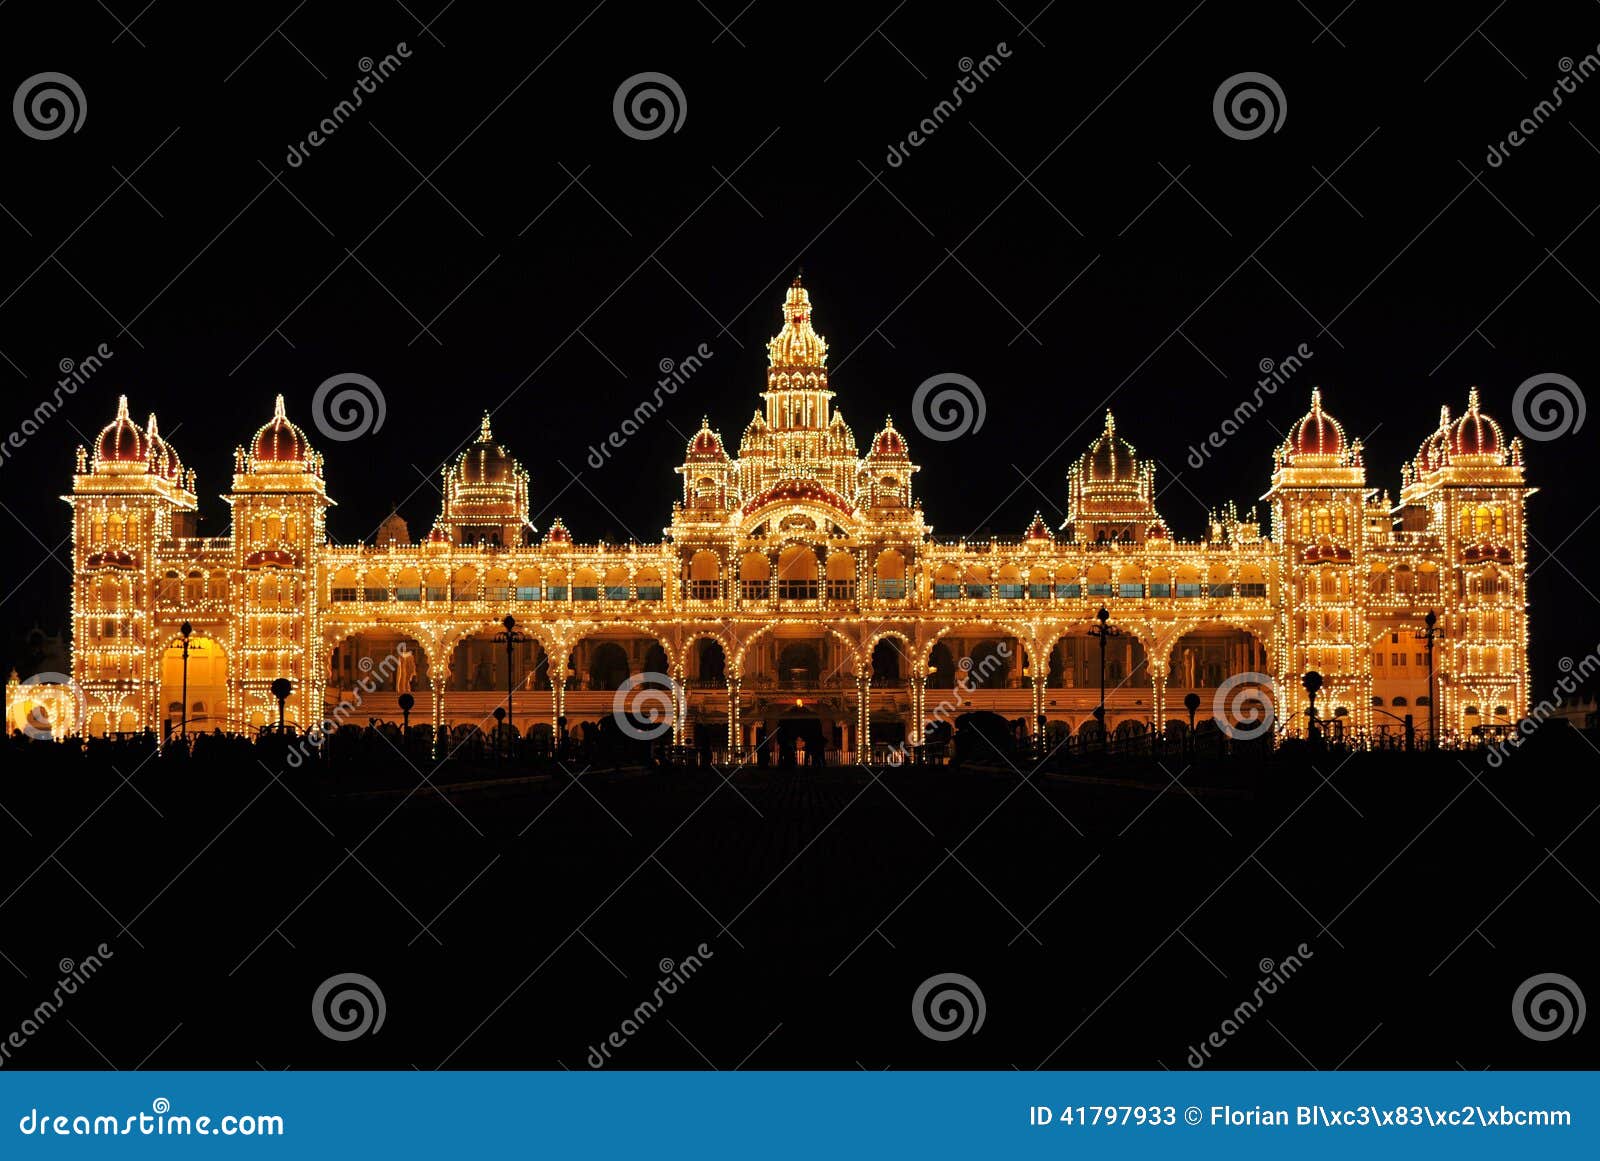 mysore palace in india illuminated at night